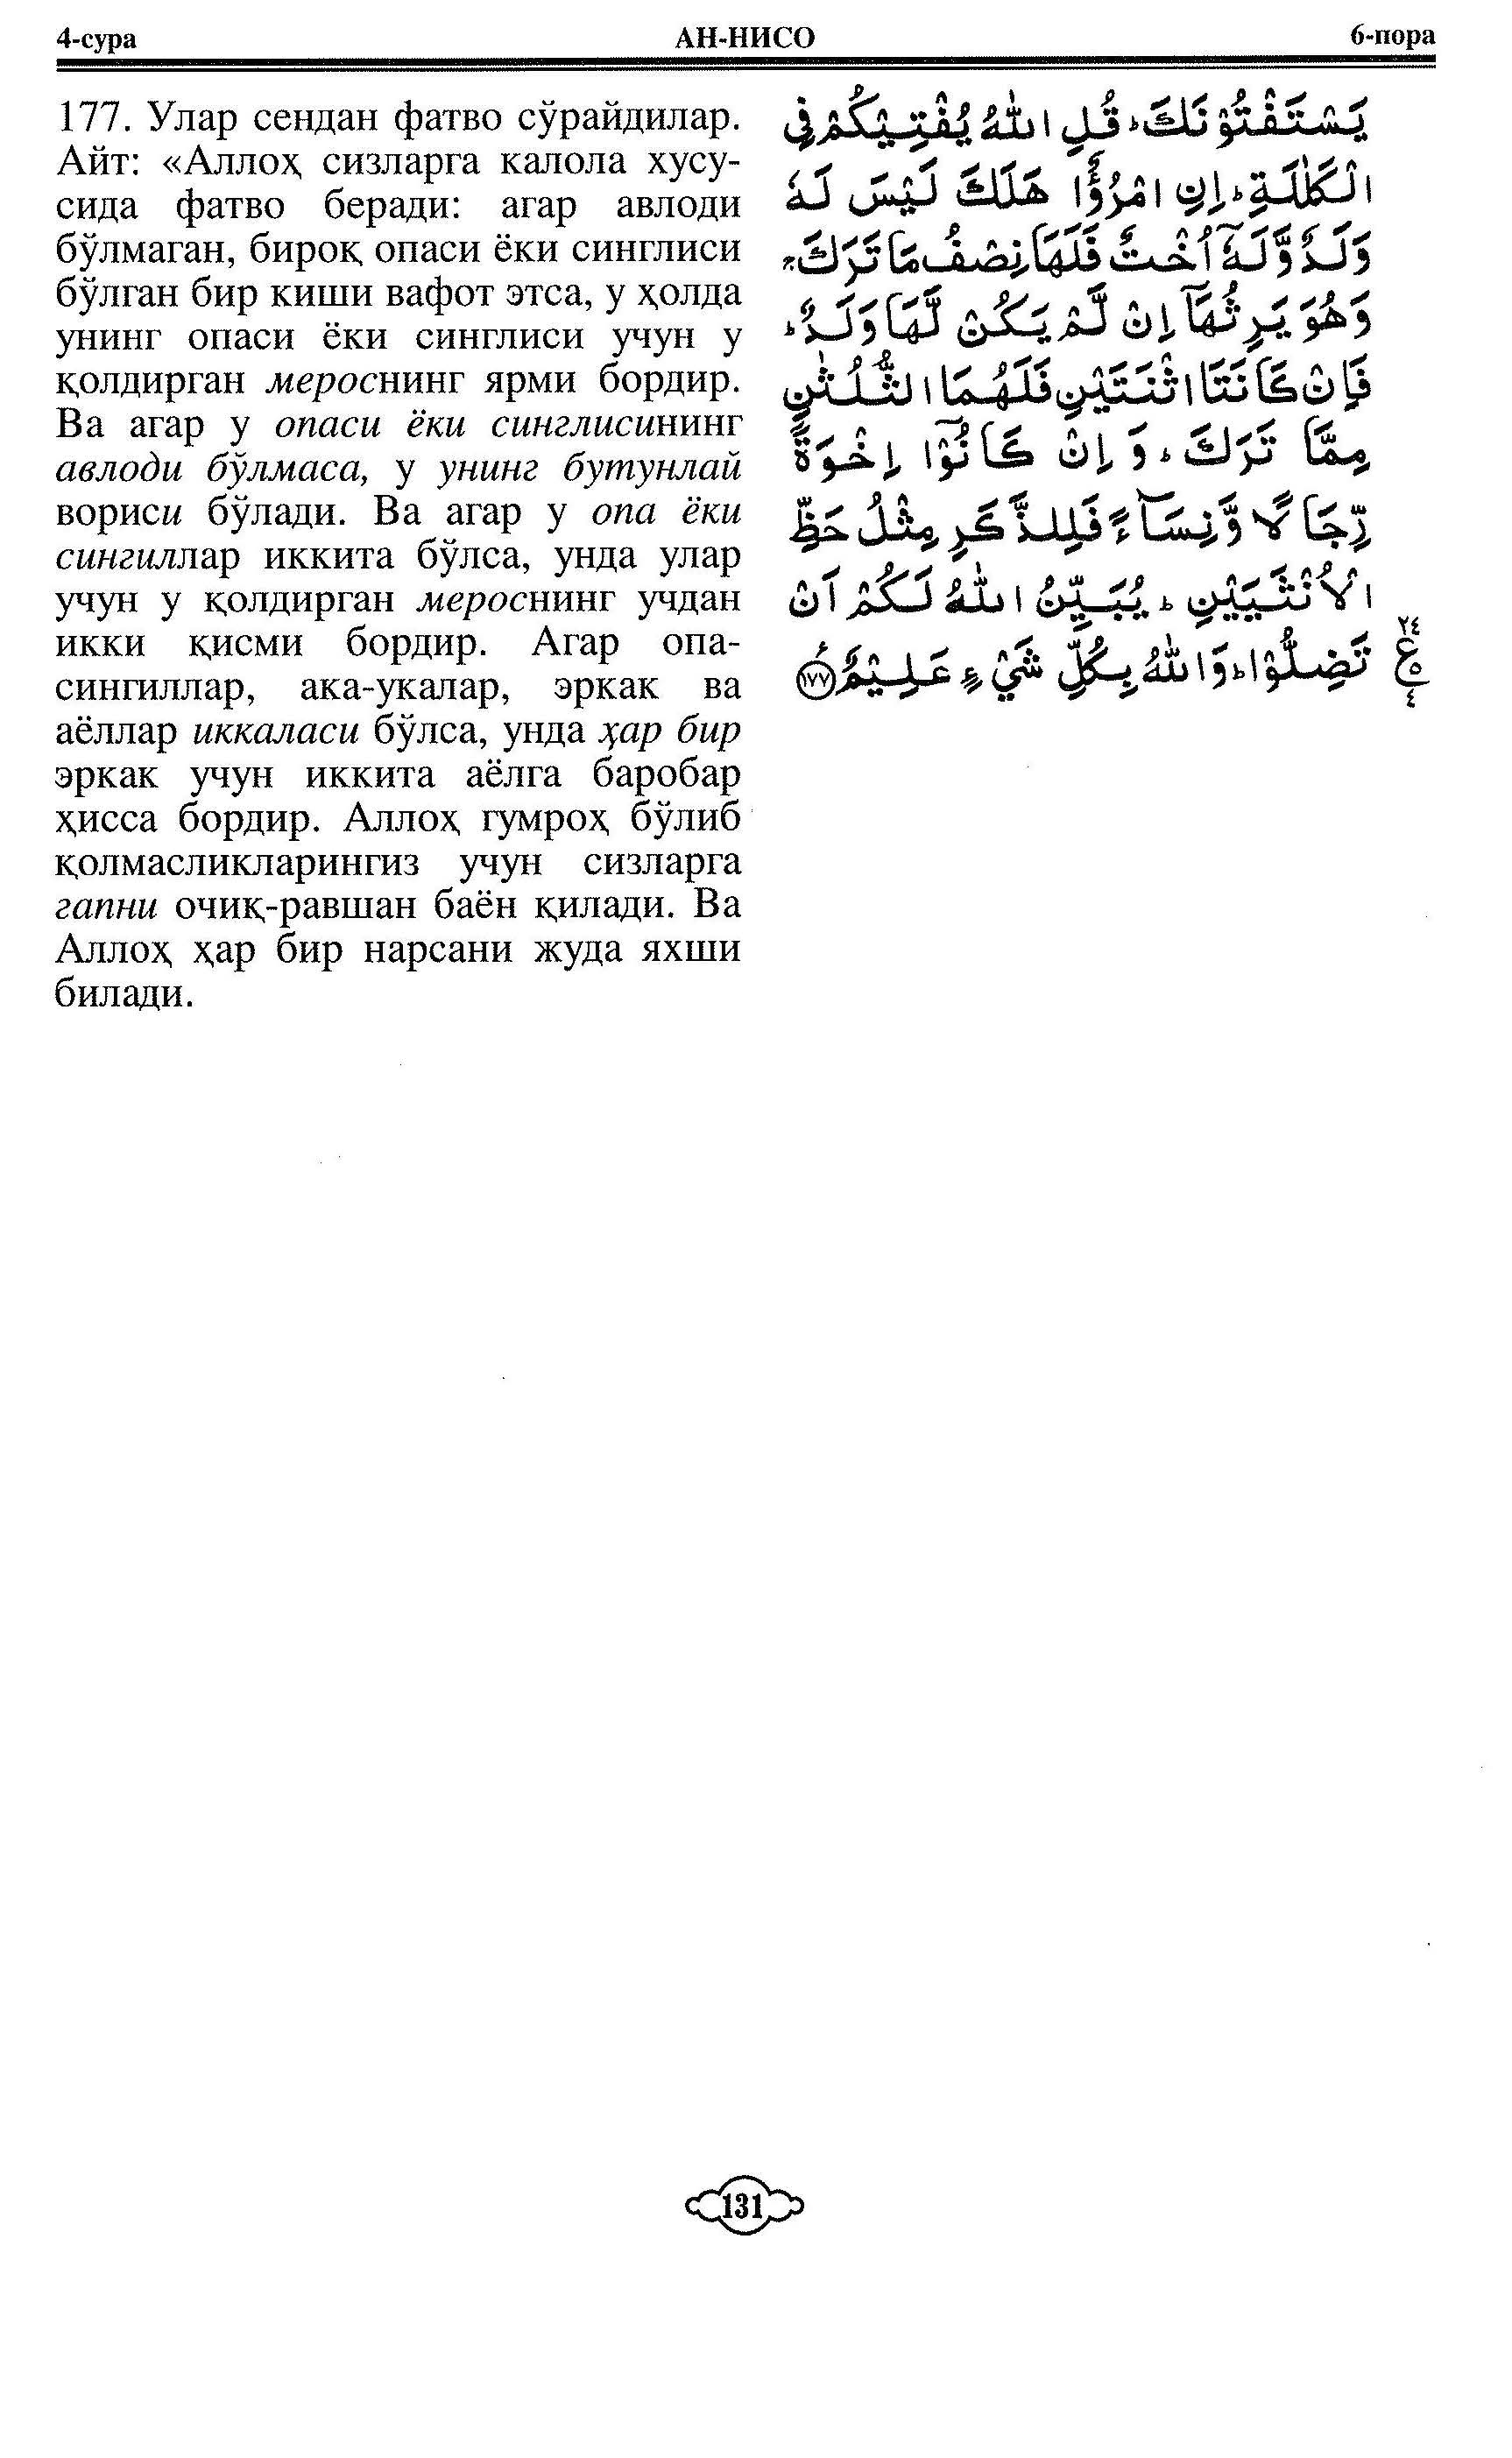 004-al-nisa_Page_37_Image_0001